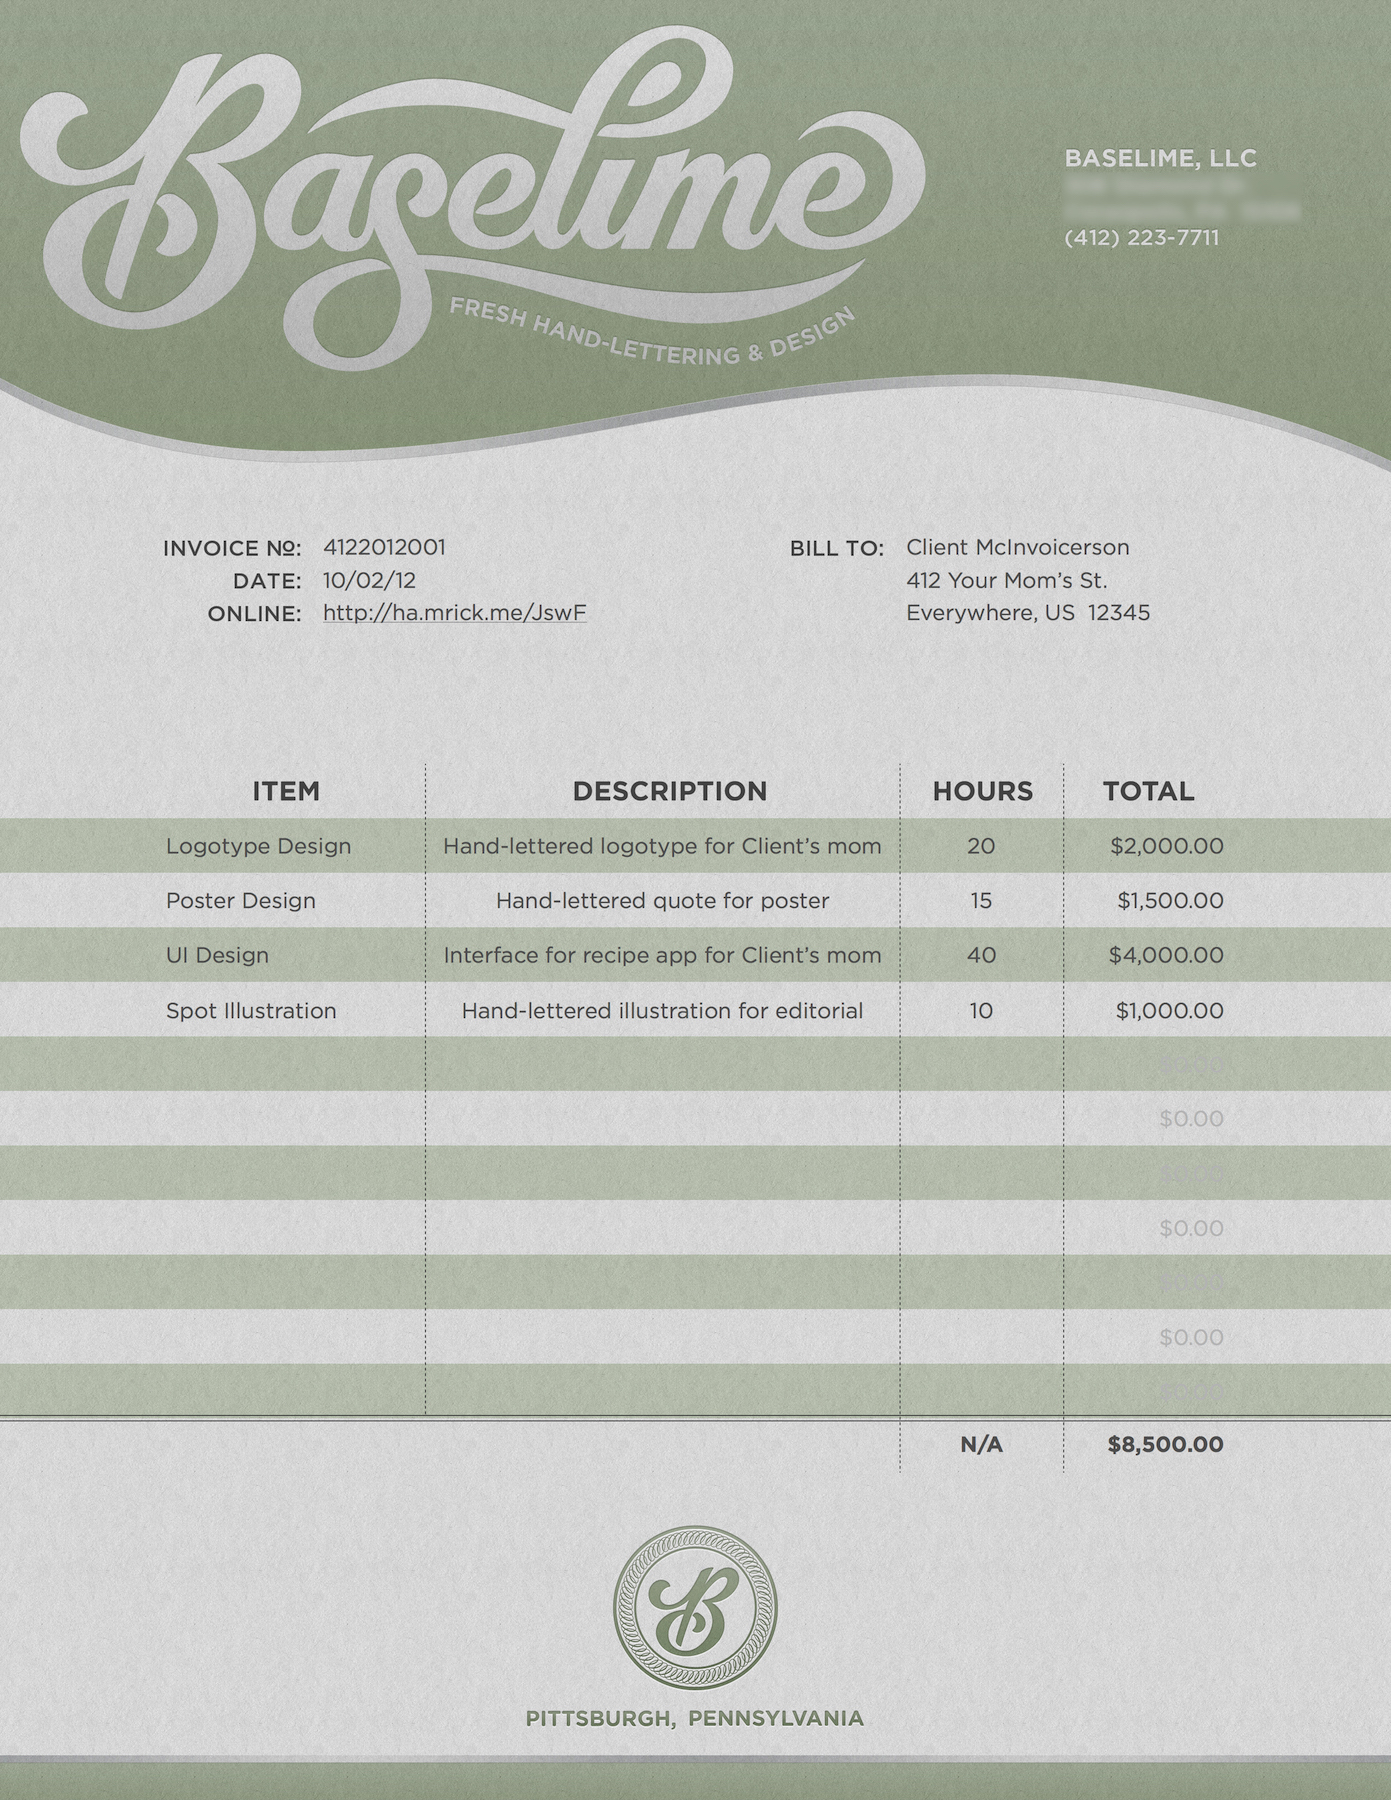 Download] Freelance Graphic Designer Invoice (Template) – Bonsai Within Invoice Template For Graphic Designer Freelance